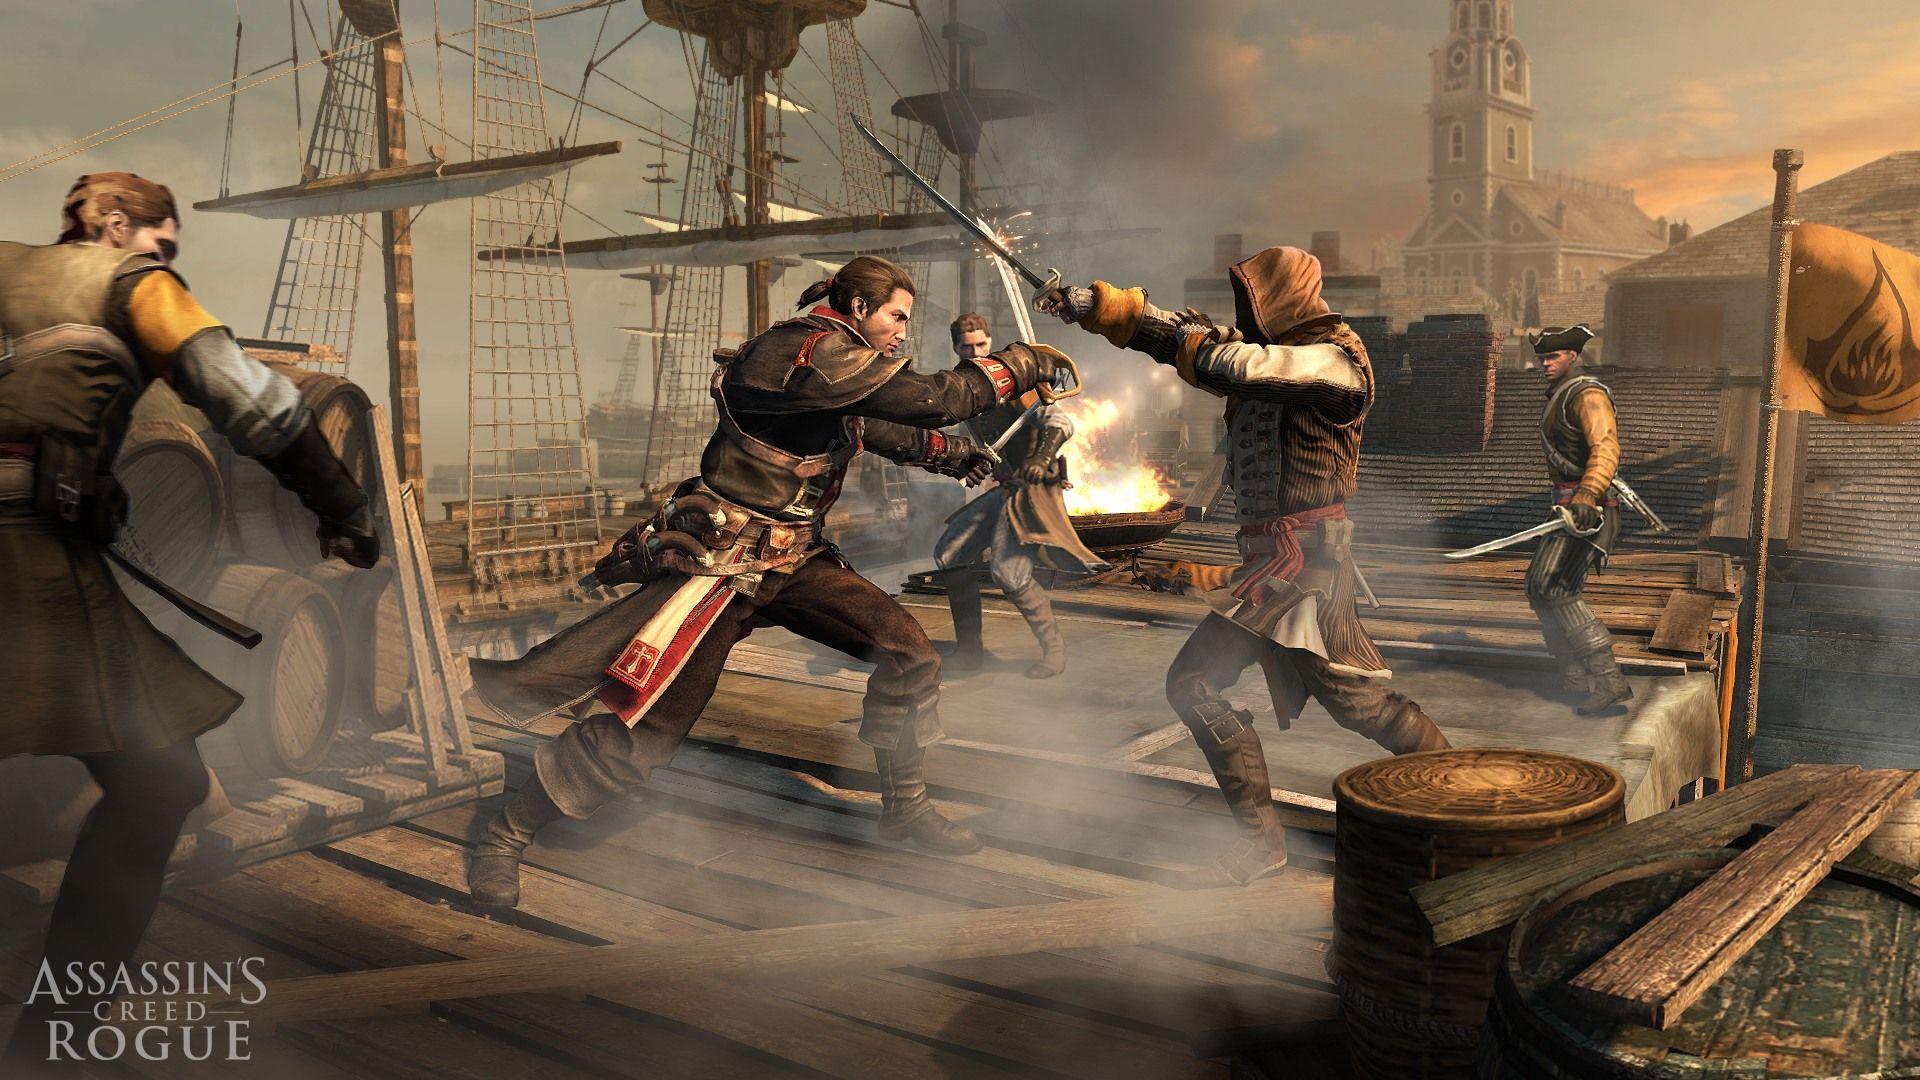 Assassin's Creed Rogue Screenshots, Picture, Wallpaper